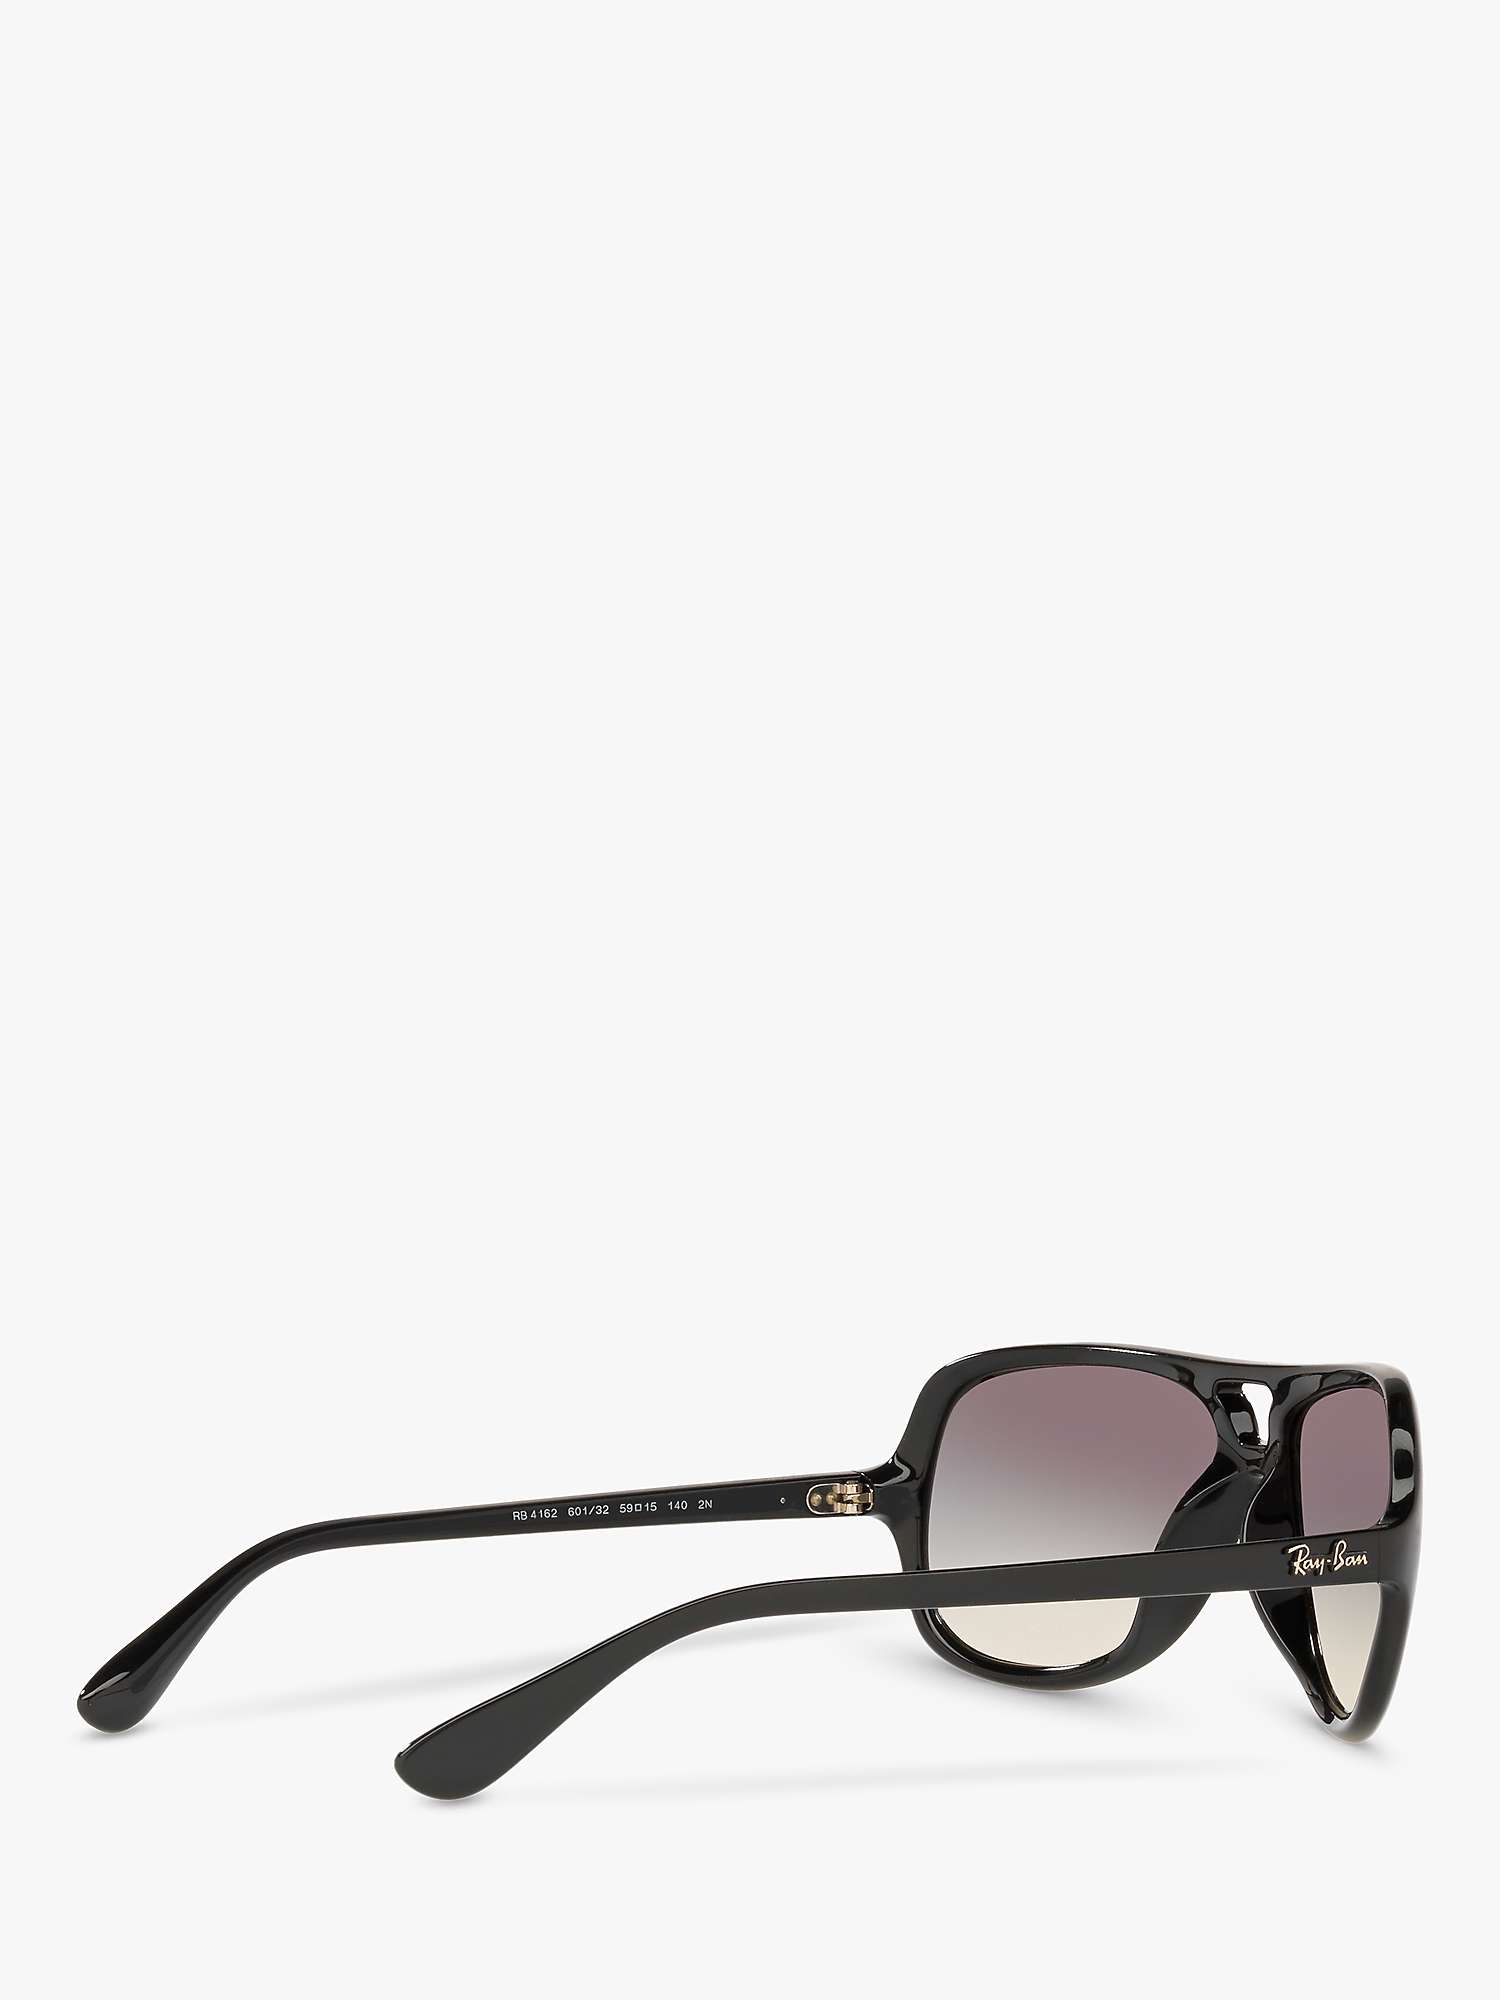 Buy Ray-Ban RB4162 Men's Aviator Sunglasses, Black/Grey Gradient Online at johnlewis.com